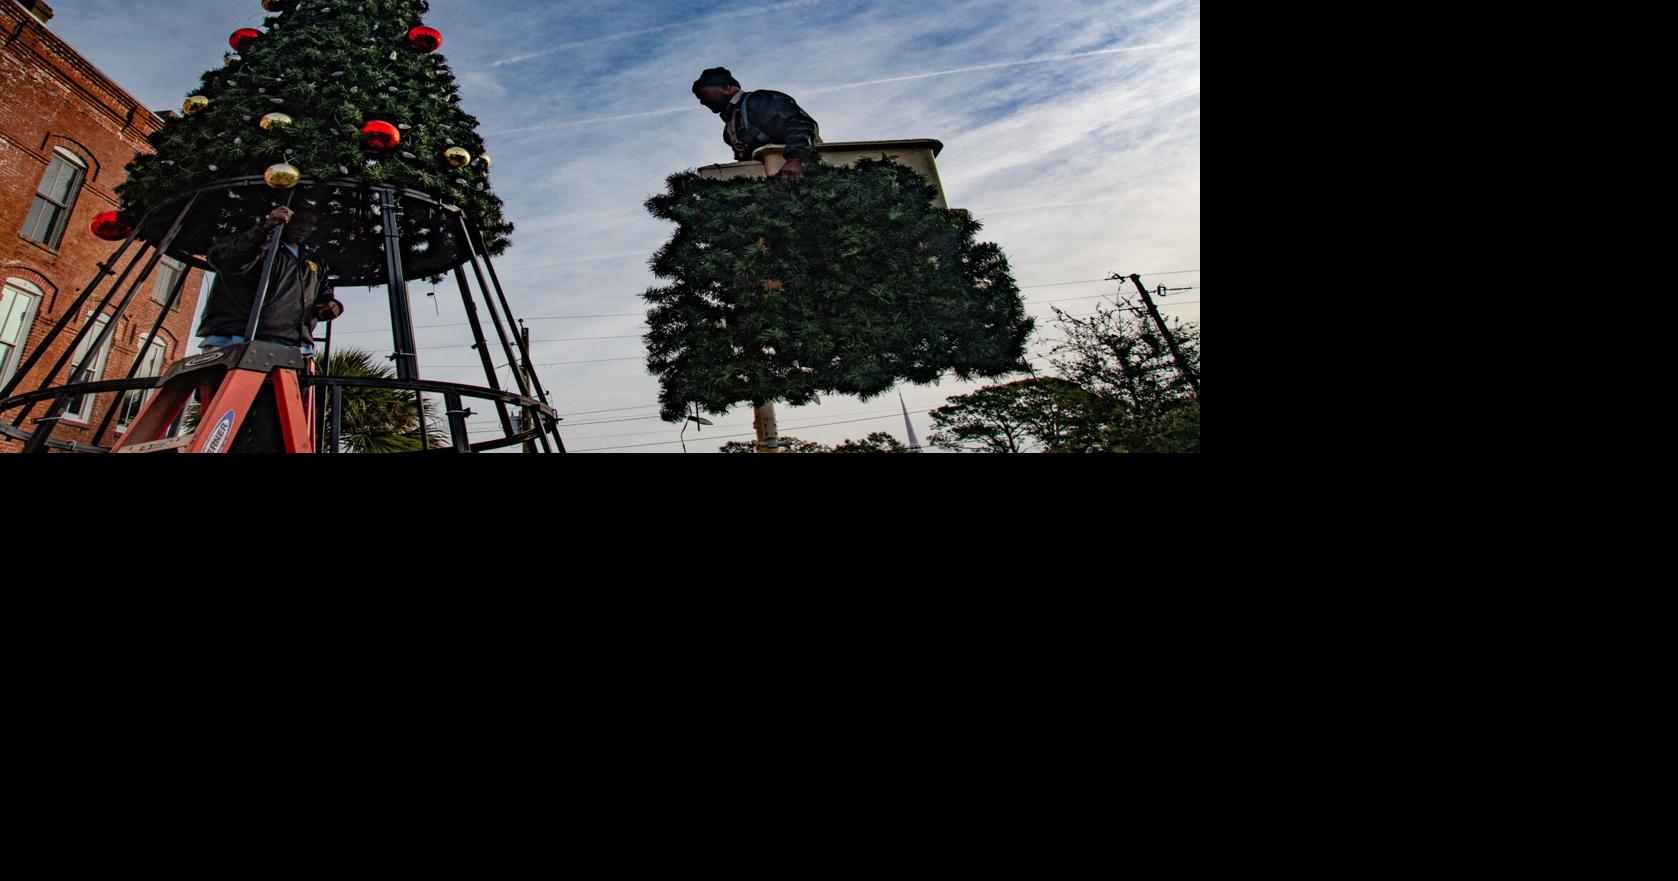 Brunswick tree lighting event to kick off Christmas season today